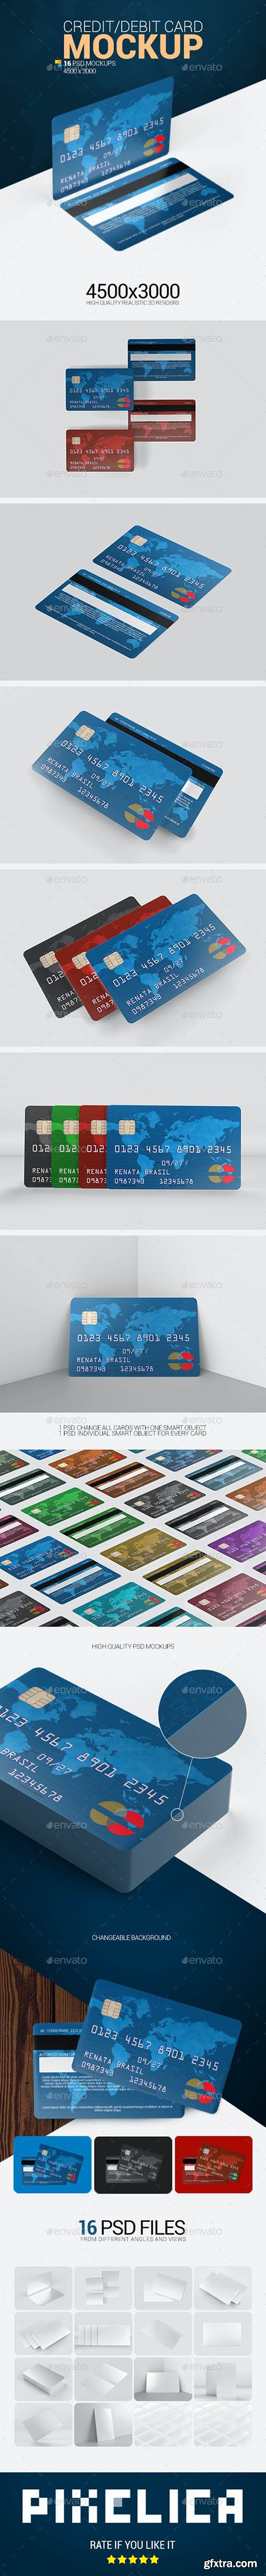 GraphicRiver - Credit Debit Card Mockup 25488294